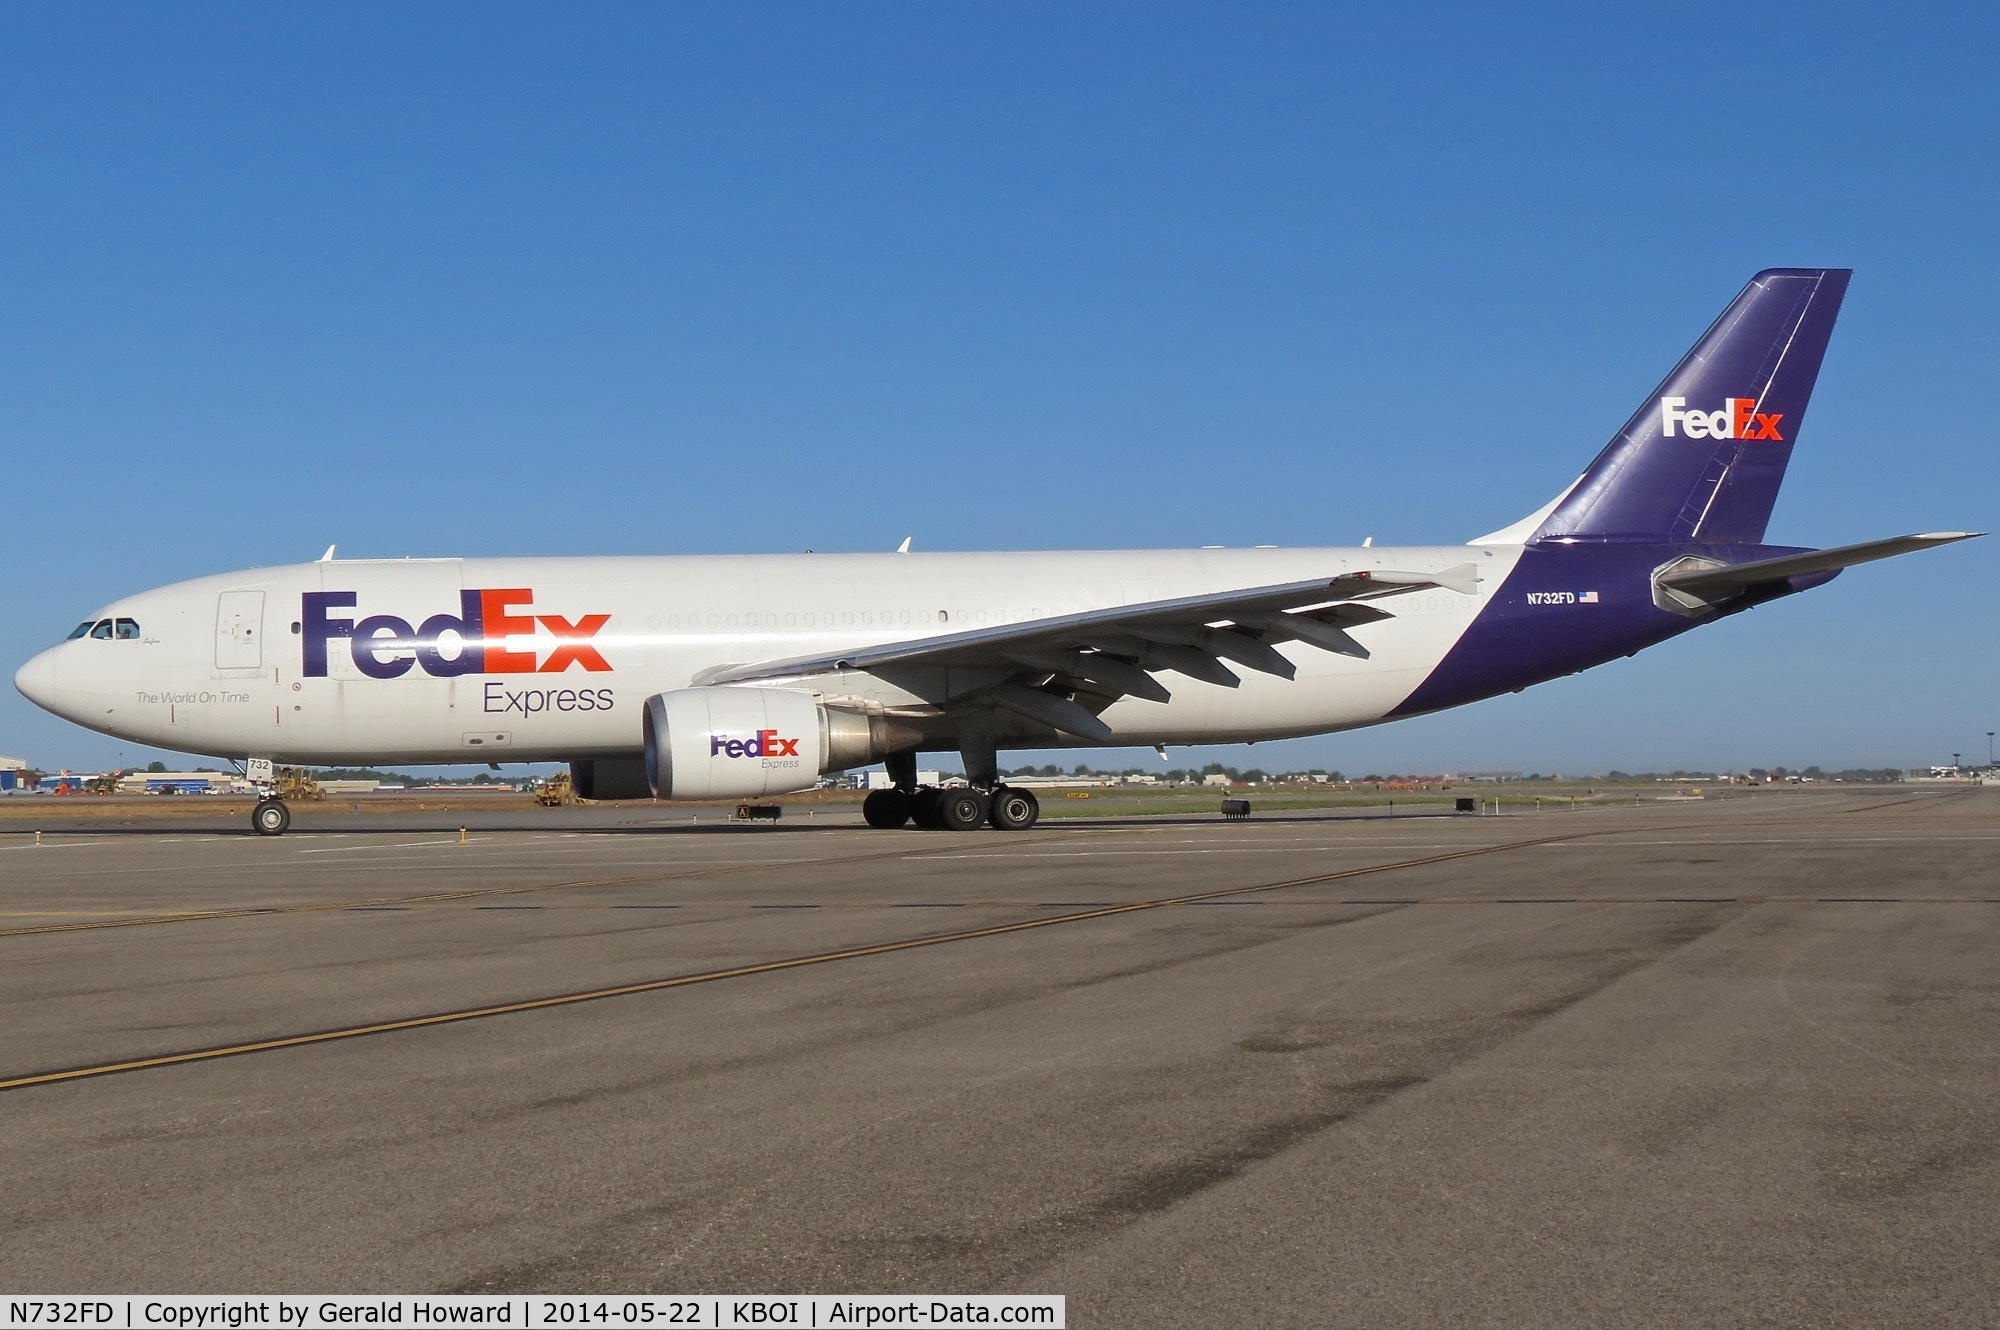 N732FD, 1993 Airbus A300B4-605R C/N 713, Leaving the FedEx ramp.